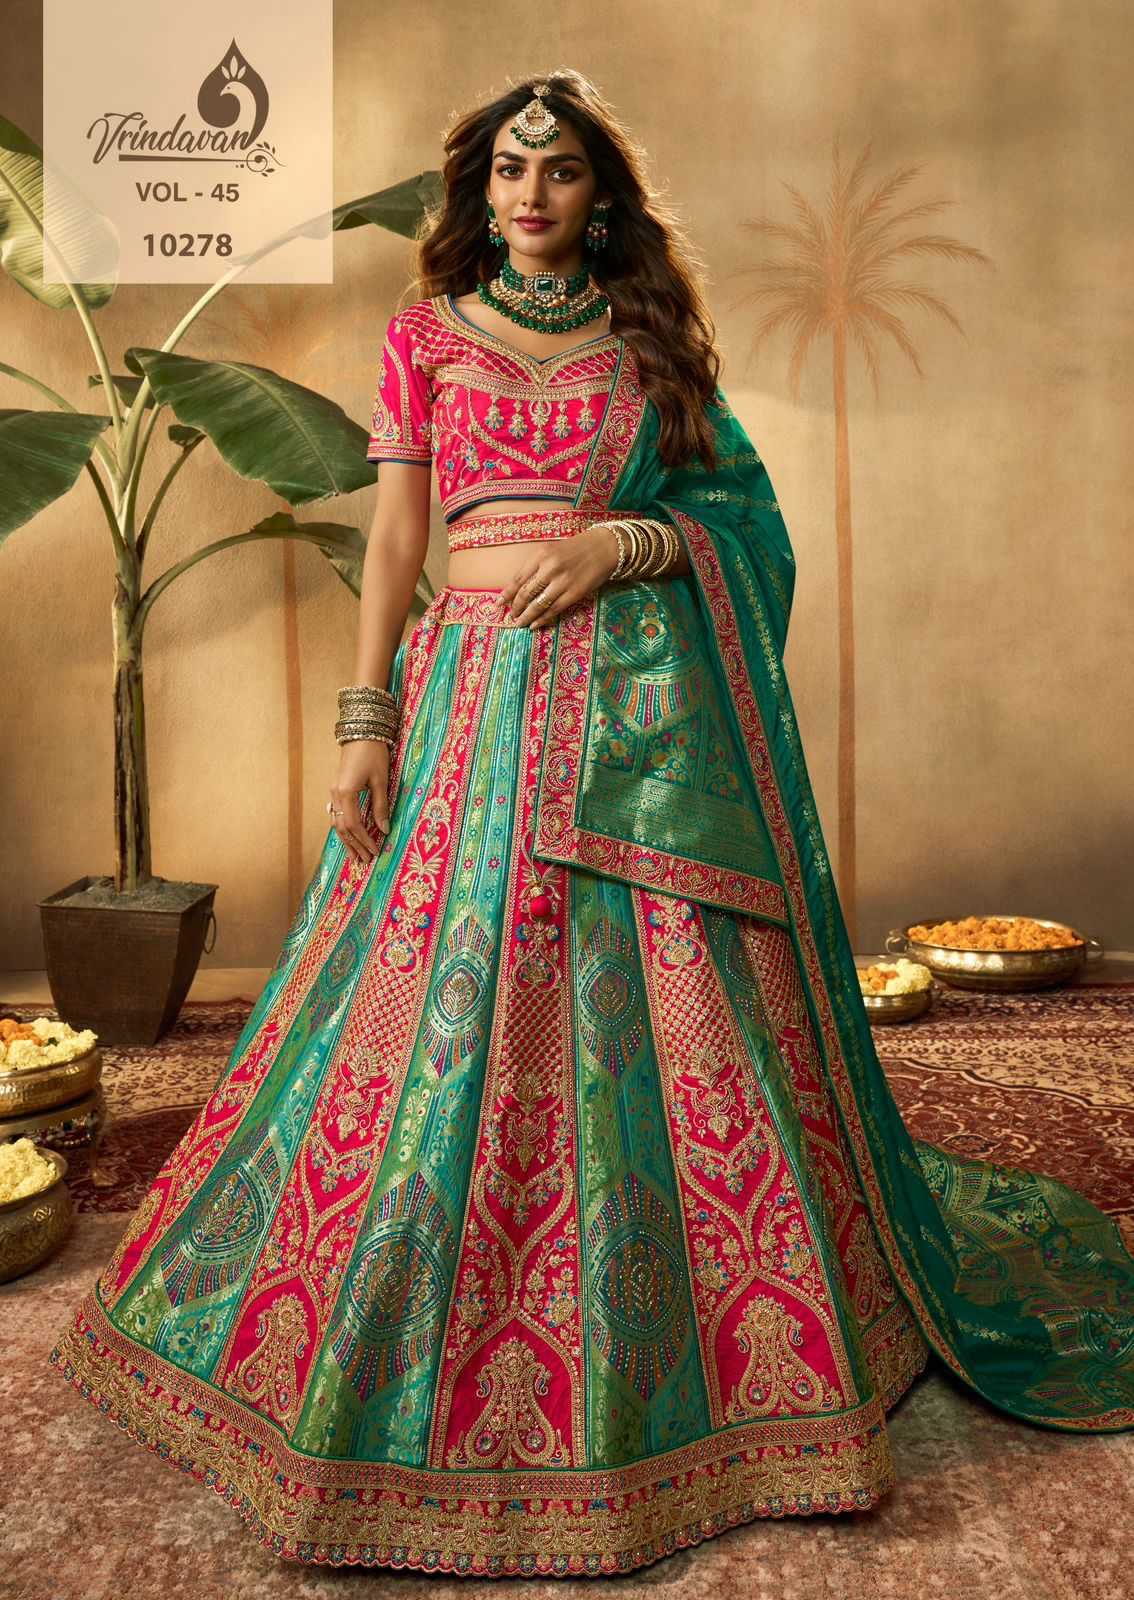 royal designer vrindavan vol 45 wedding wear banarsi silk unstitch lehenga collection